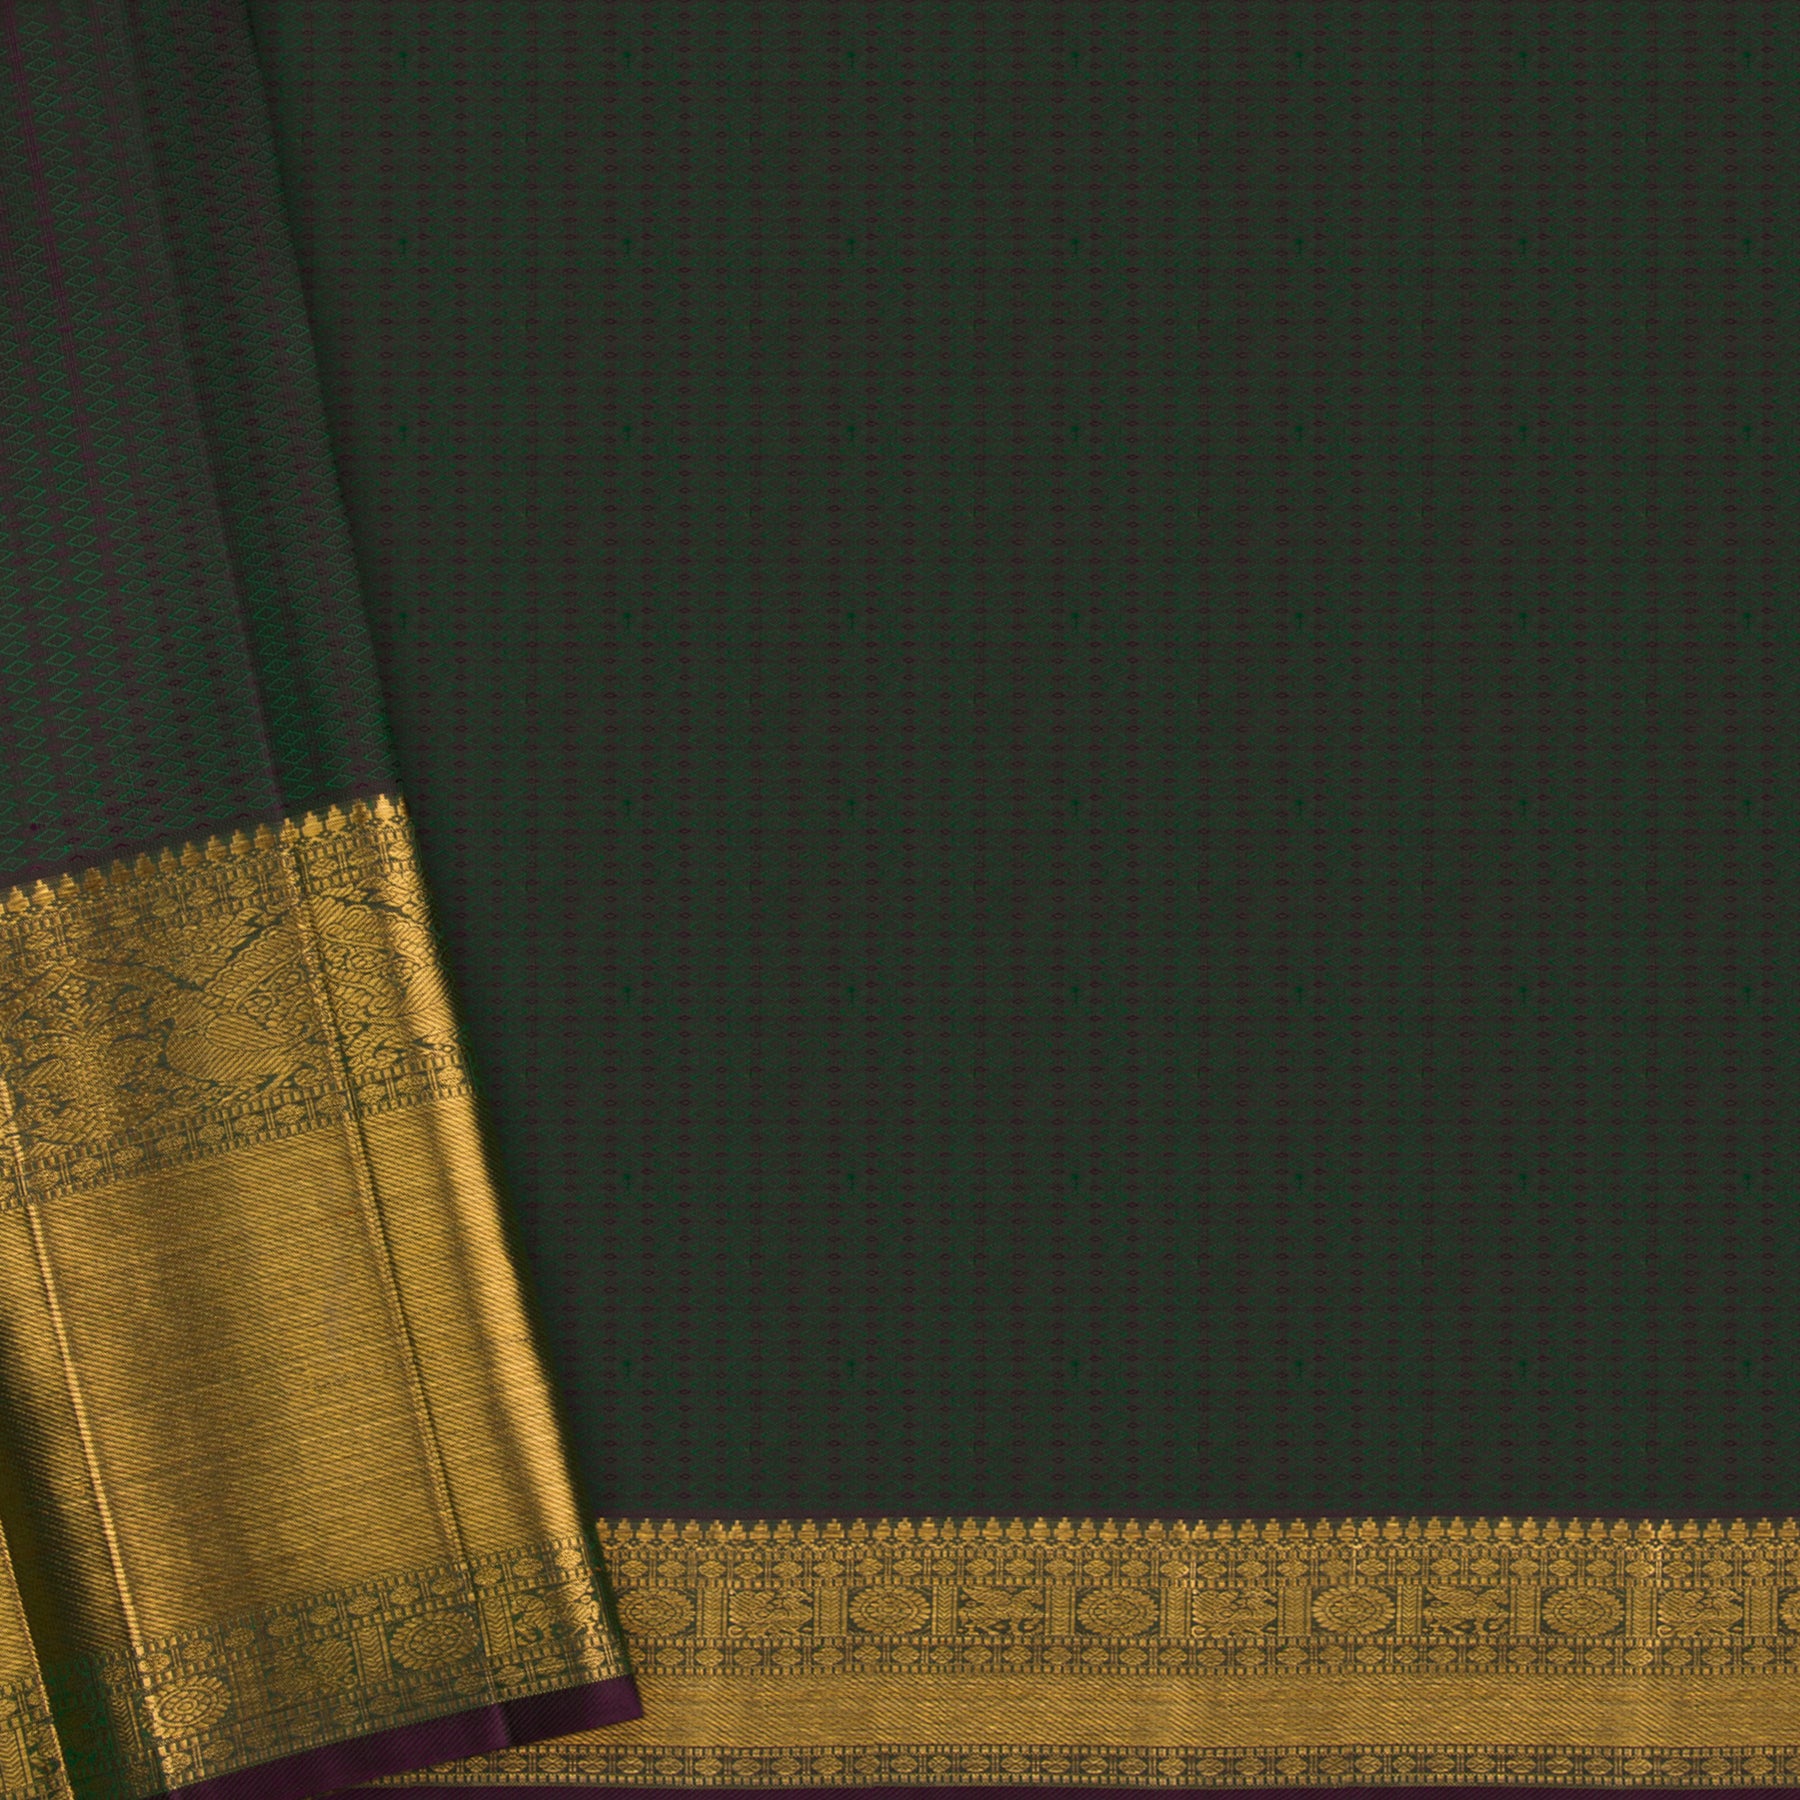 Kanakavalli Kanjivaram Silk Sari 22-110-HS001-09545 - Blouse View